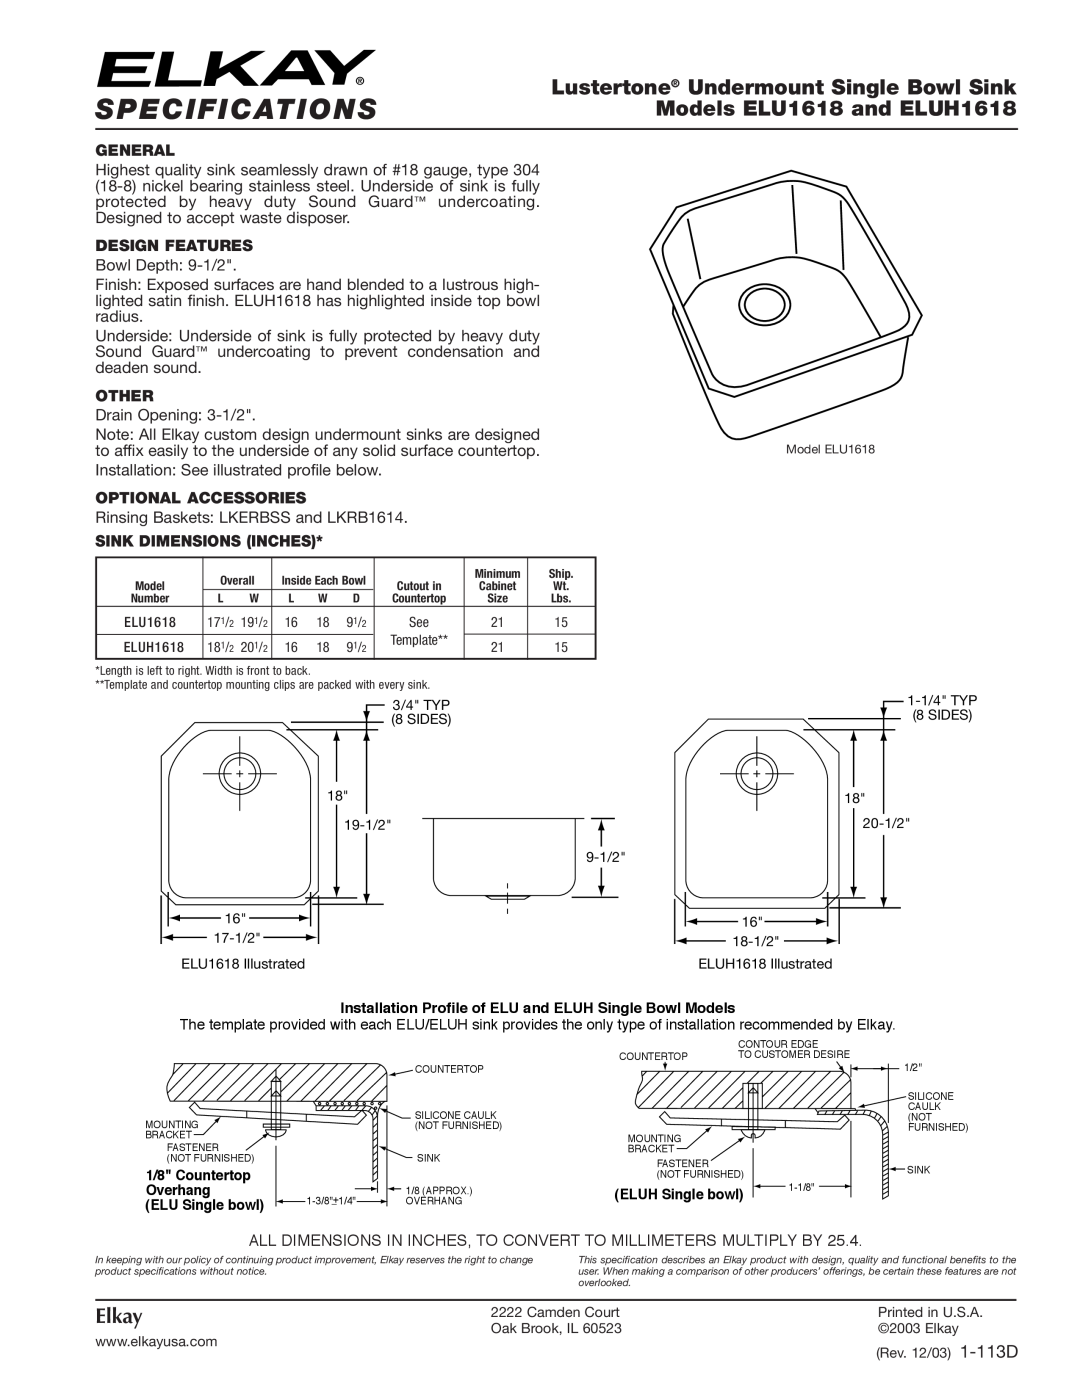 Elkay specifications Specifications, Lustertone Undermount Single Bowl Sink, Models ELU1618 and ELUH1618, Elkay, Other 